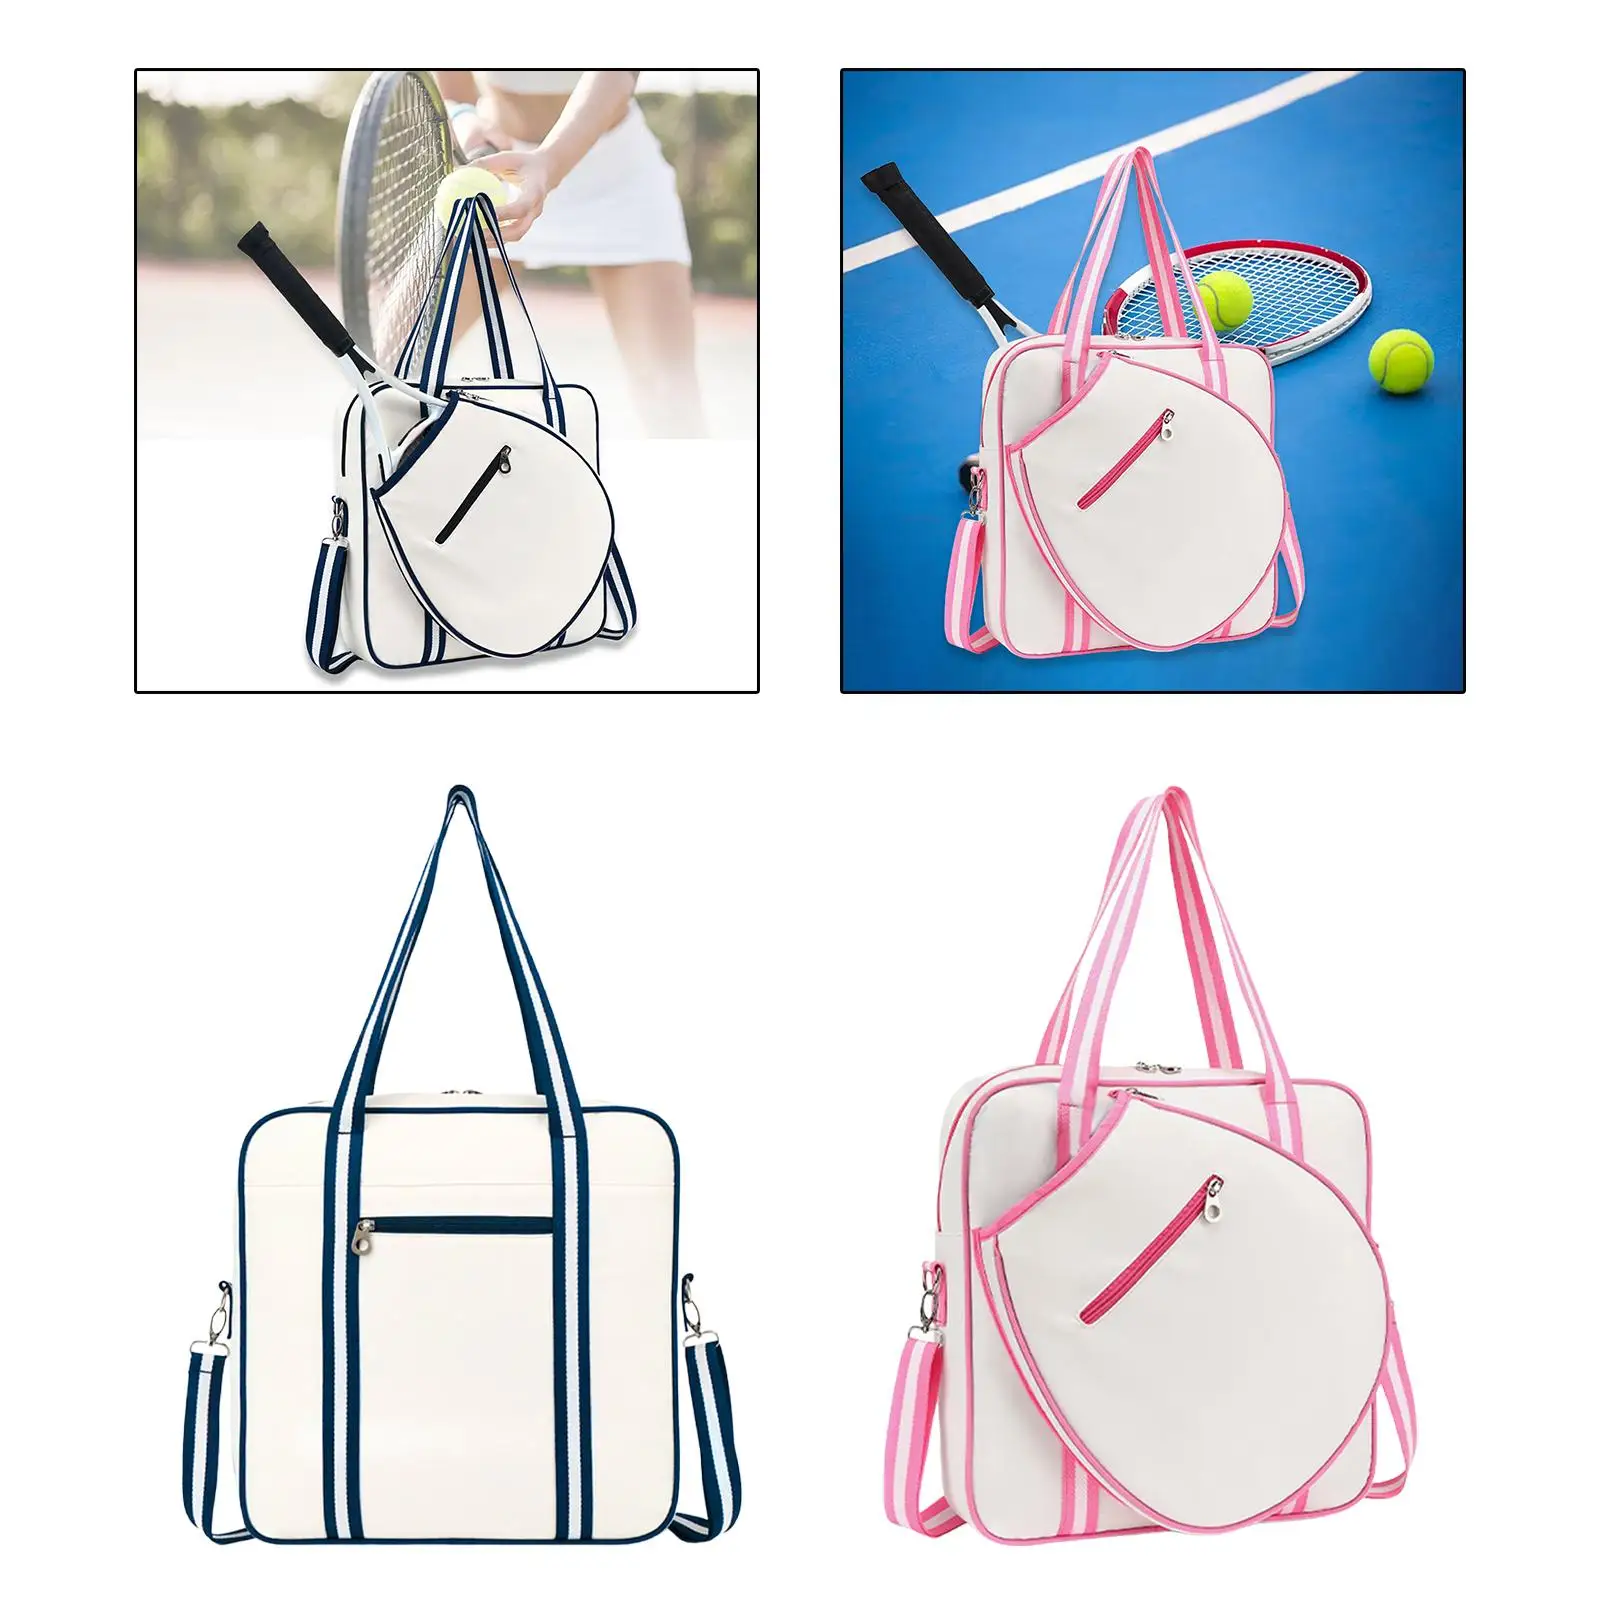 Tennis Shoulder Bag Tennis Tote Handbag High Density Polyester Fabric 15x4x15inch for Pickleball Paddles, Badminton Racquet